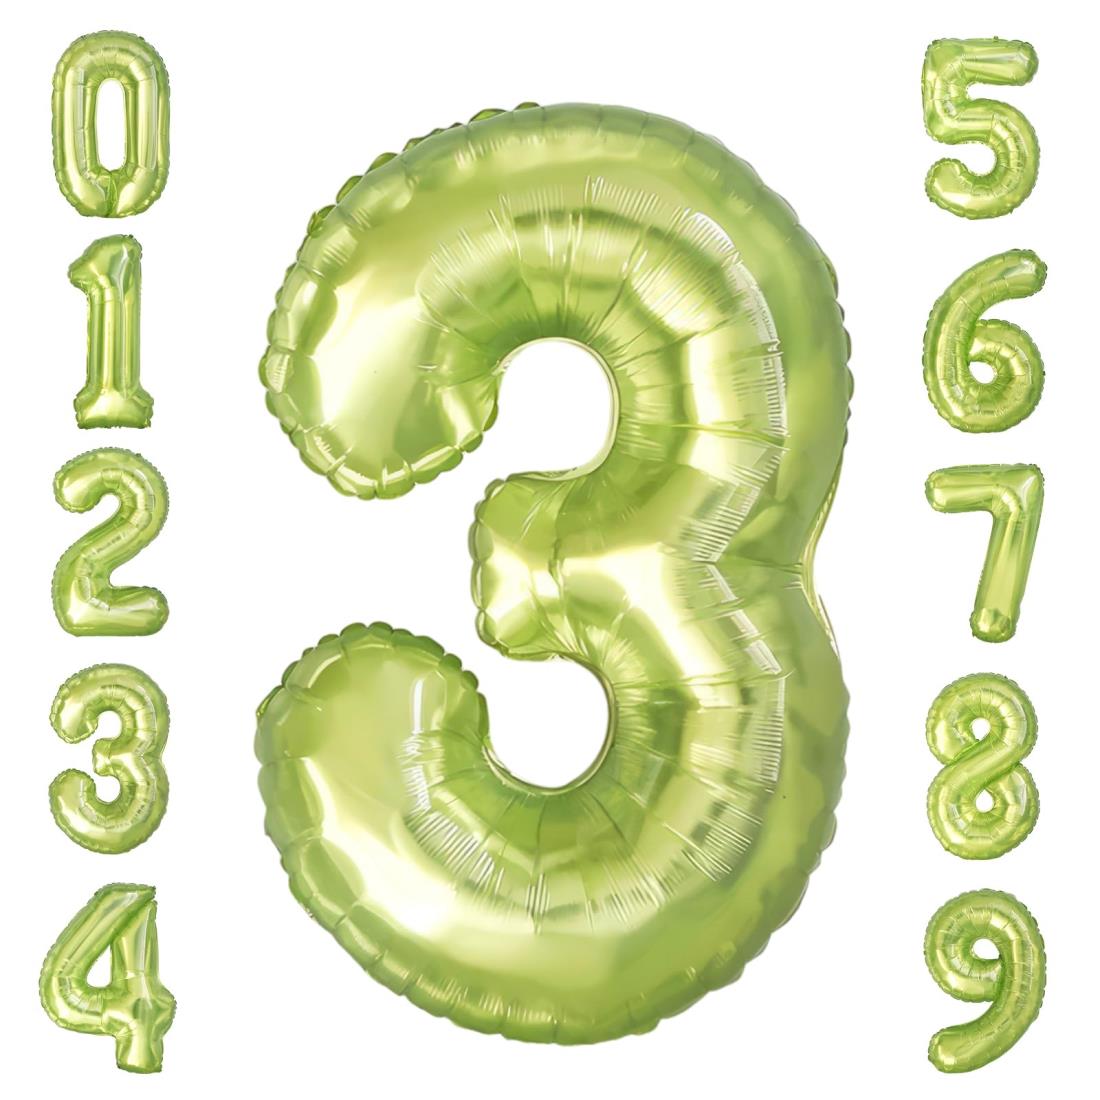 GRESATEK バルーン 数字 風船 誕生日 緑色 40インチ 大きい ナンバー3 バースデーバルーン 飾り付け 結婚式 パーティー 記念日 ウェディング クリスタル ゼリー クリスタル グリーン 3